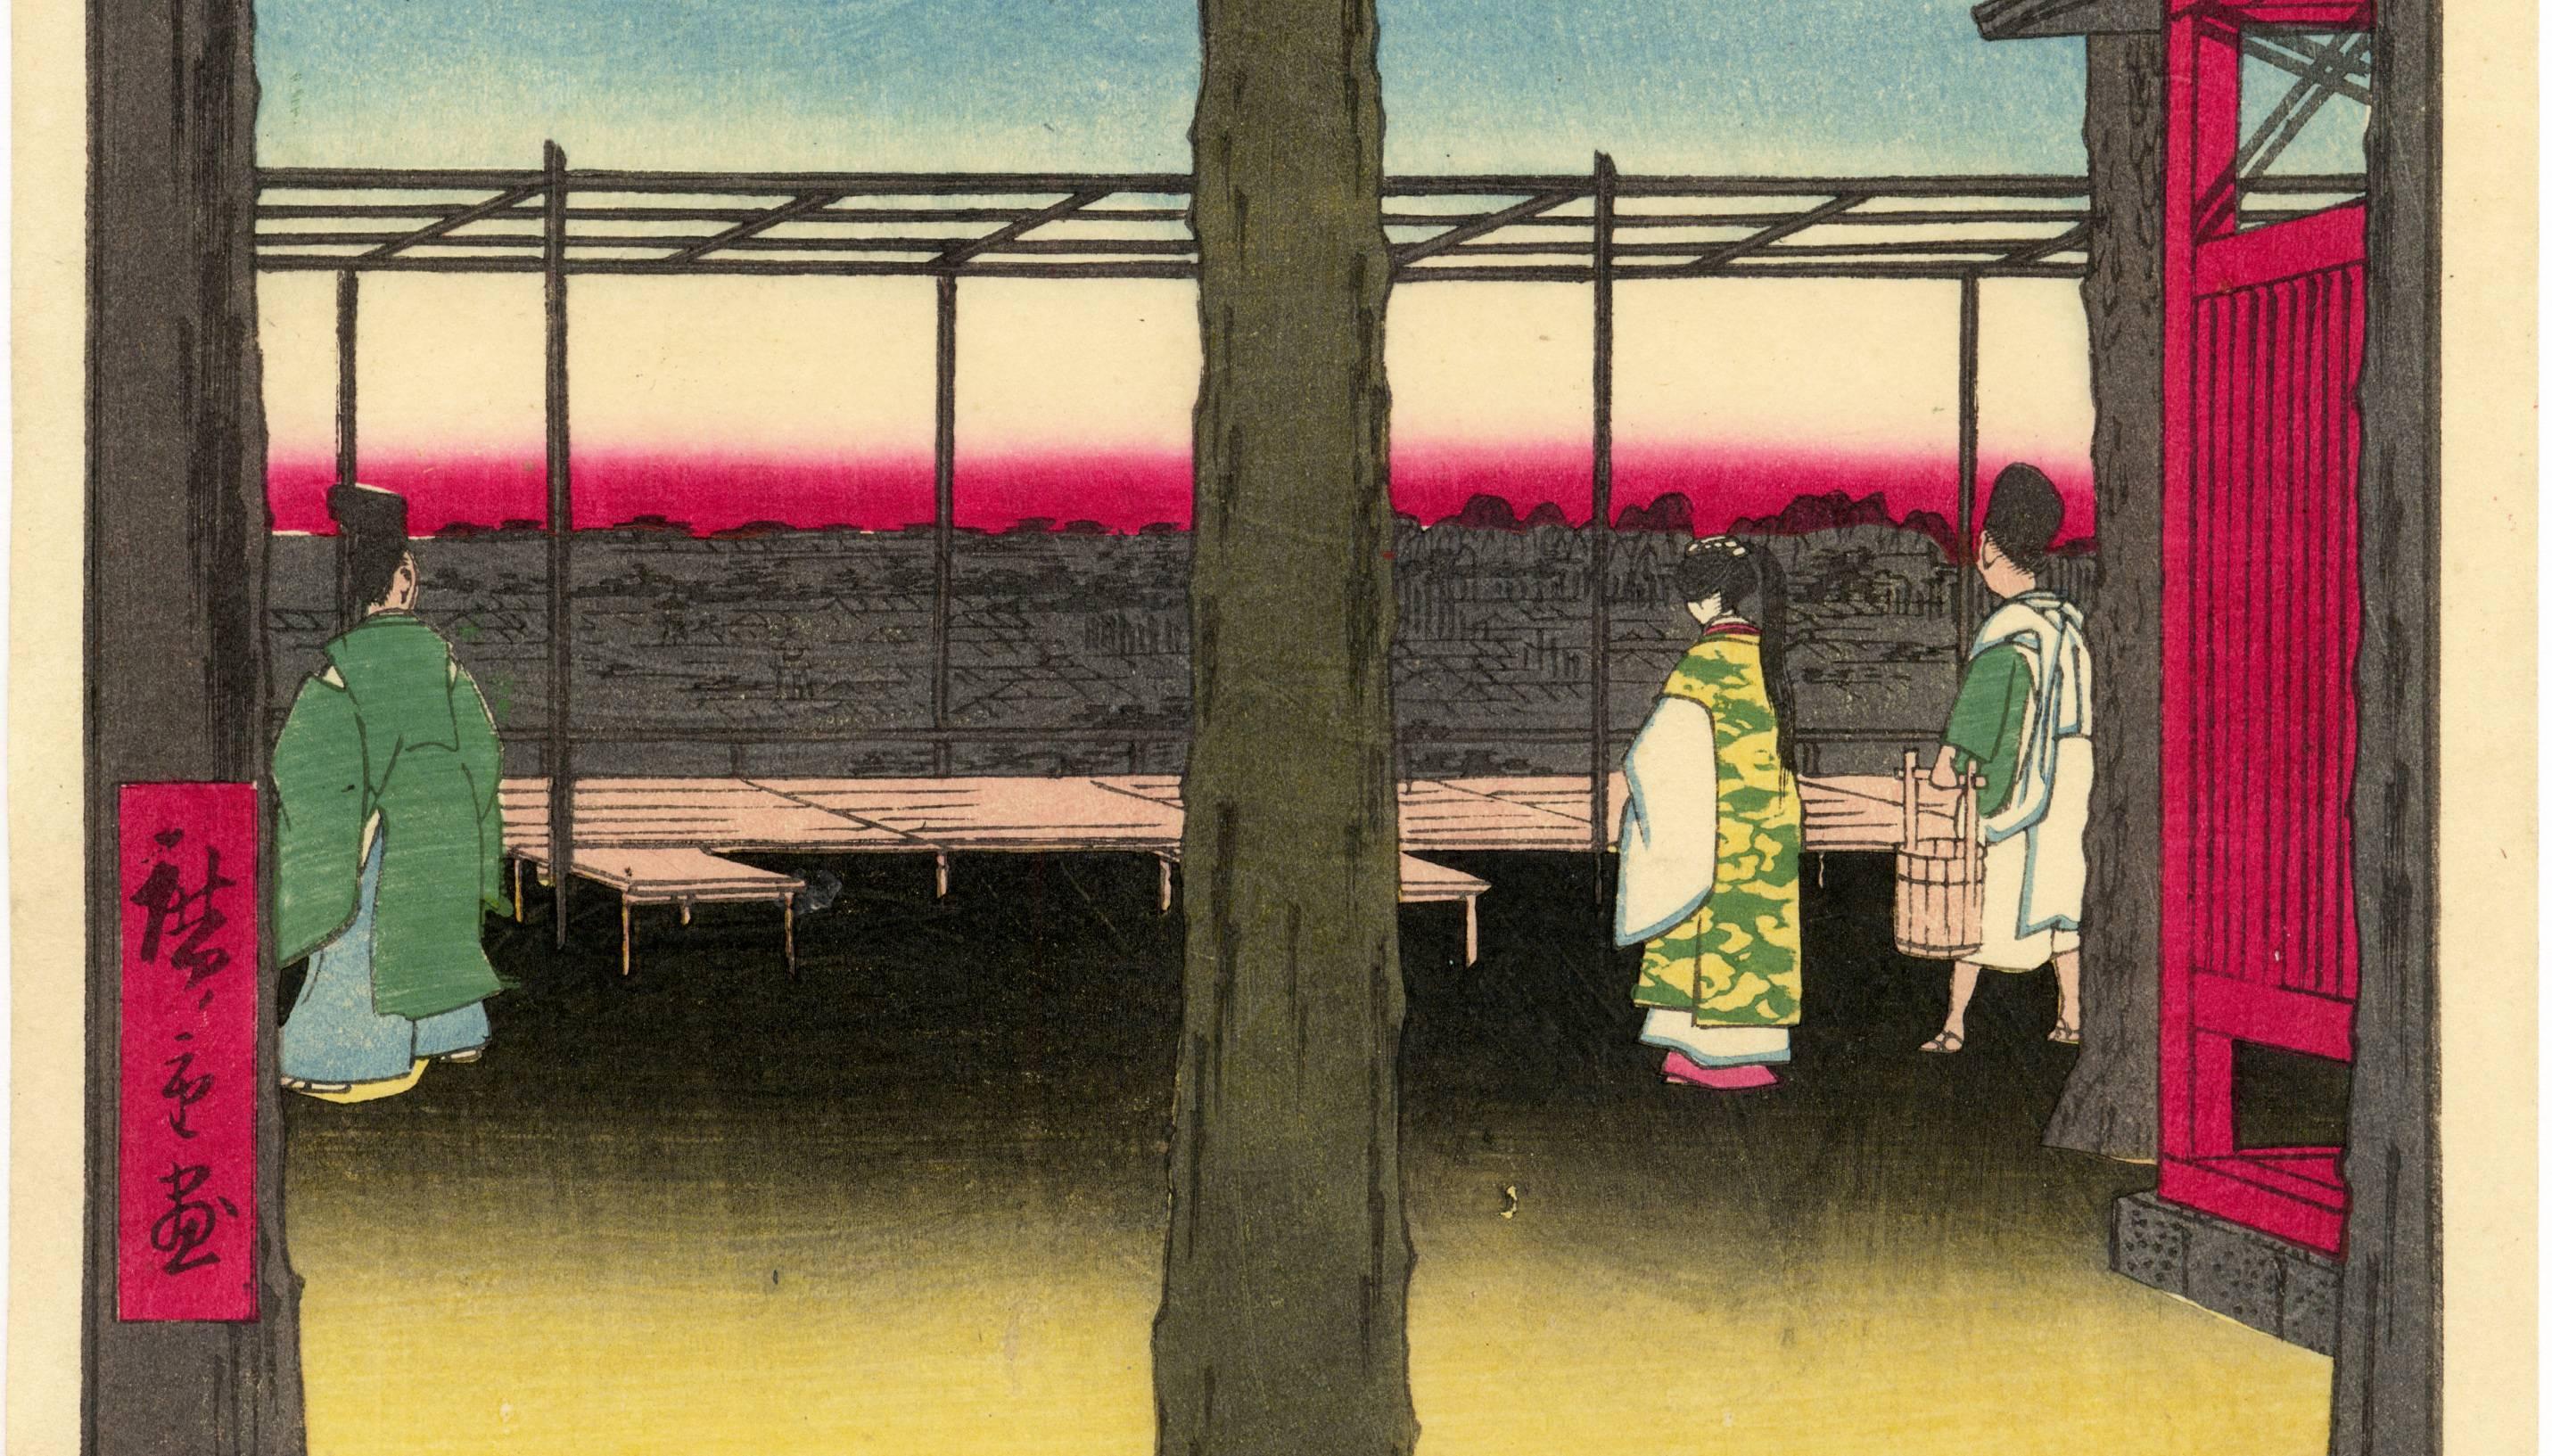 Dawn at Kanda Myojin Shrine from 100 Famous Views of Edo - Print by Utagawa Hiroshige (Ando Hiroshige)